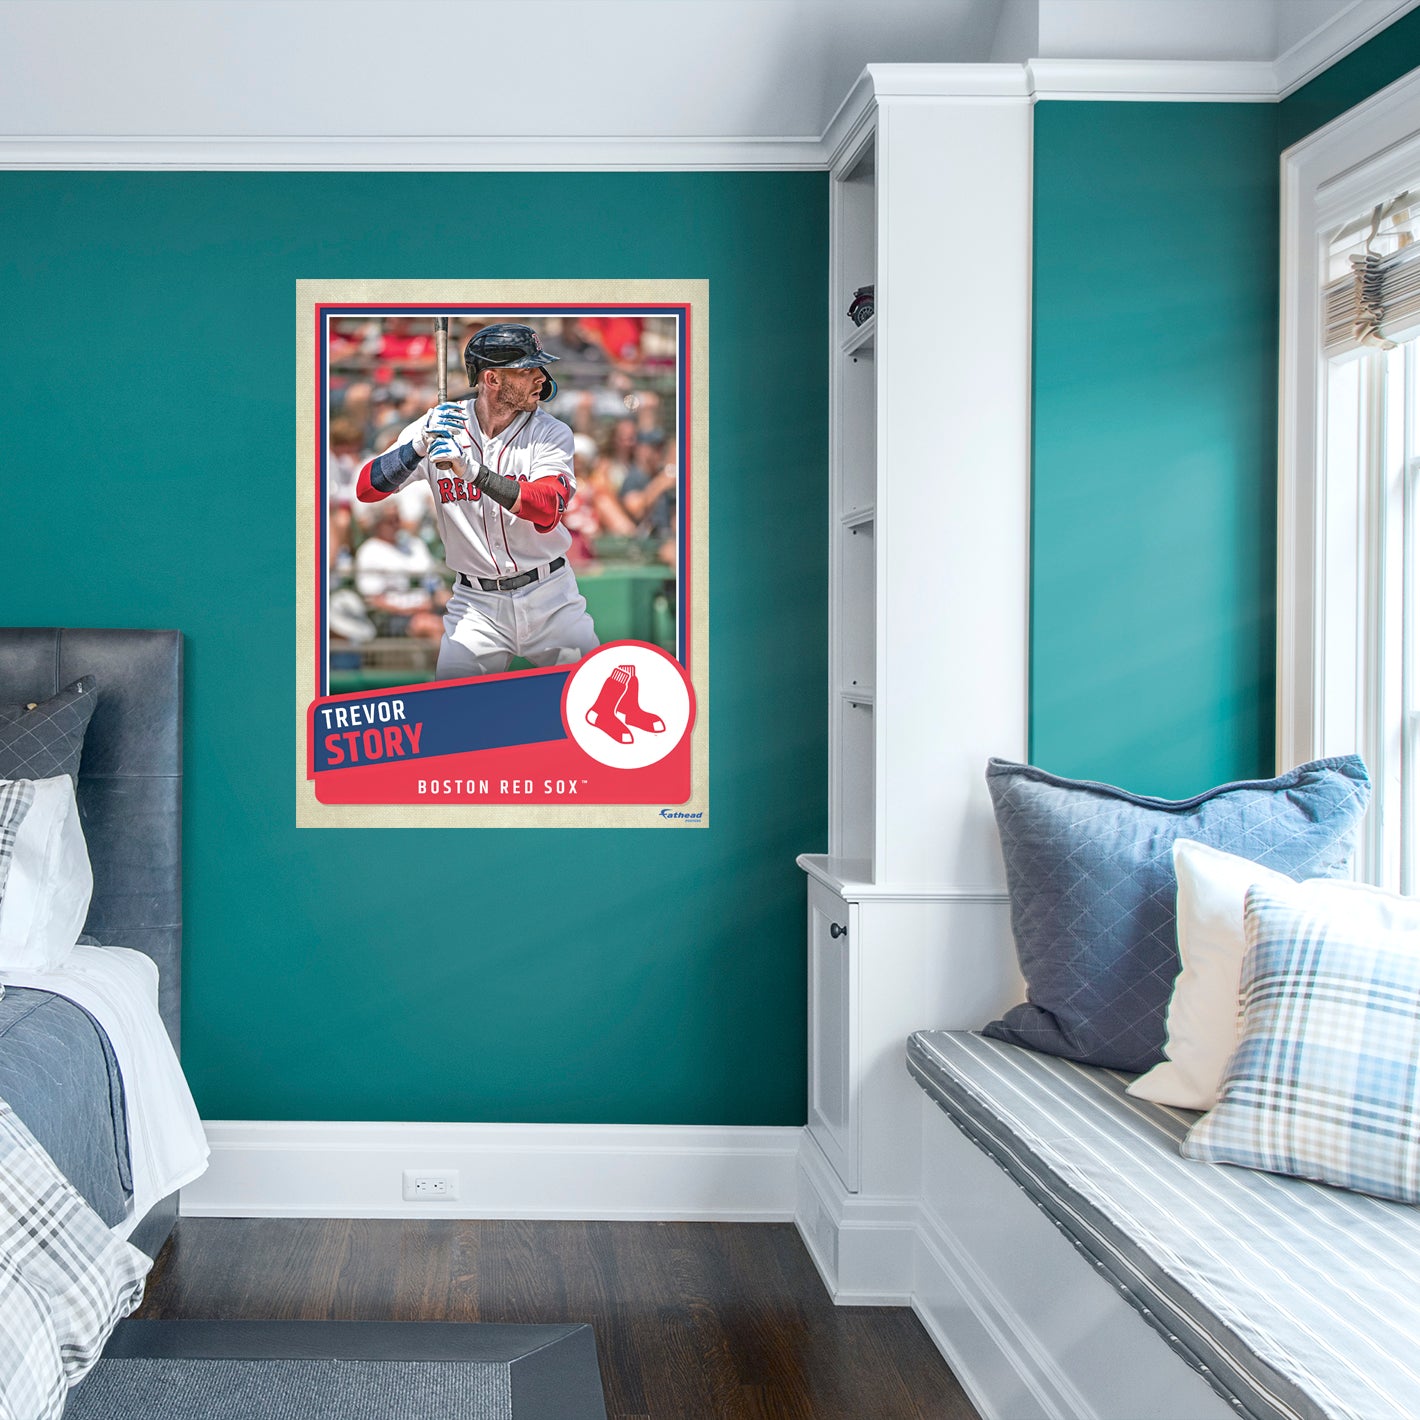 Boston Red Sox: Trevor Story 2022 Poster - Officially Licensed MLB